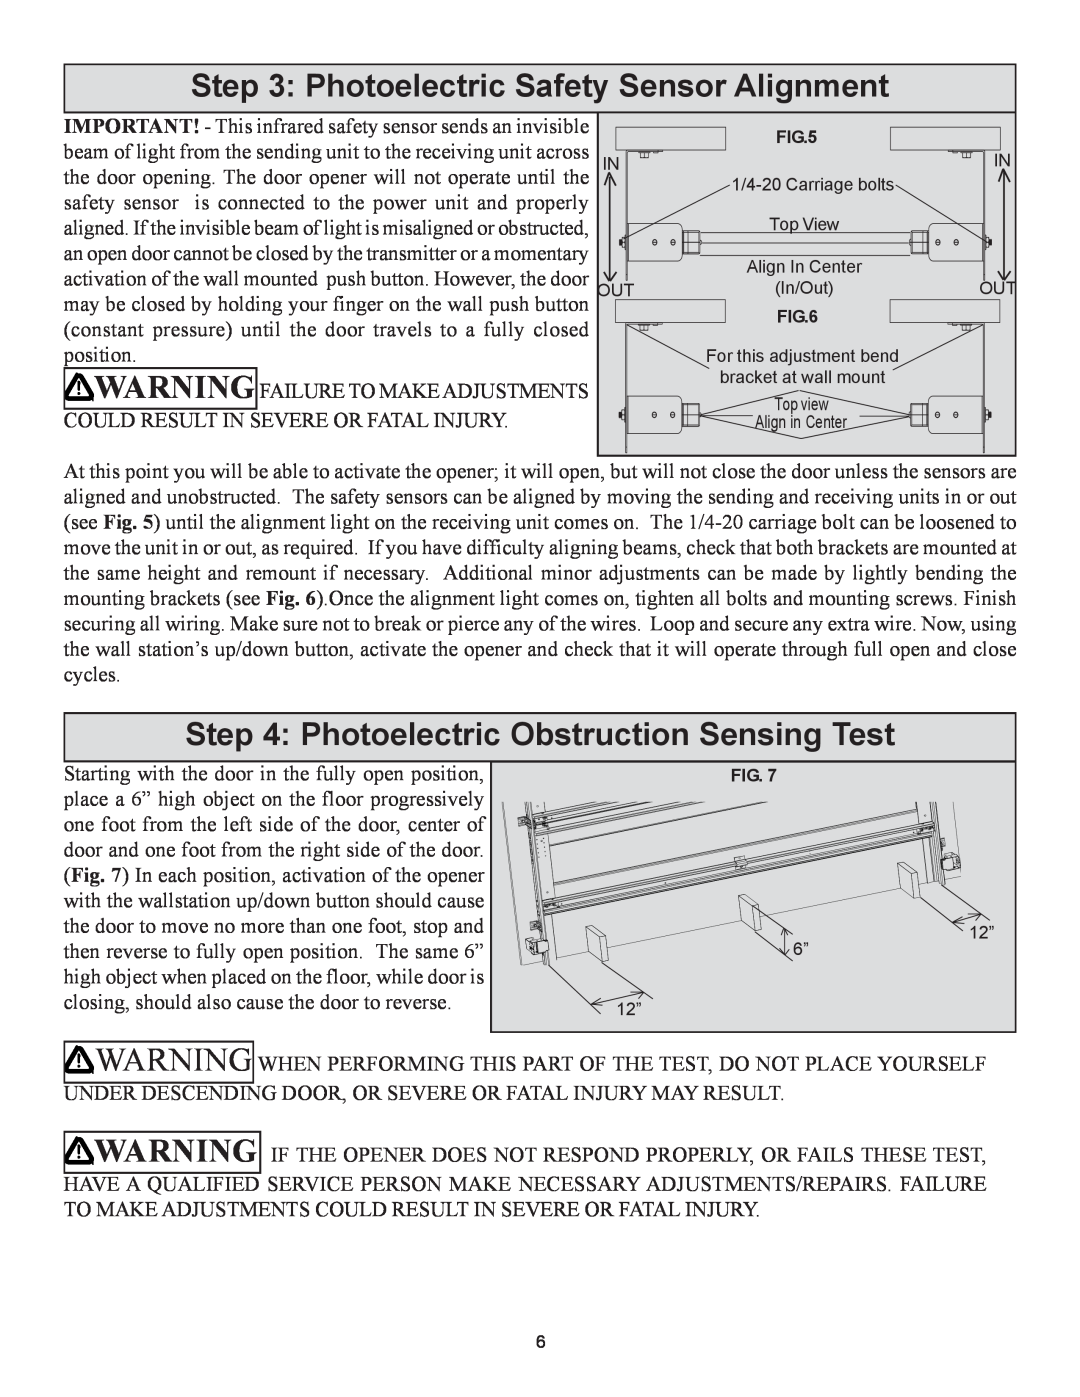 Wayne-Dalton 3651-372, 3012, 3014, 3750-372 Photoelectric Safety Sensor Alignment, Photoelectric Obstruction Sensing Test 